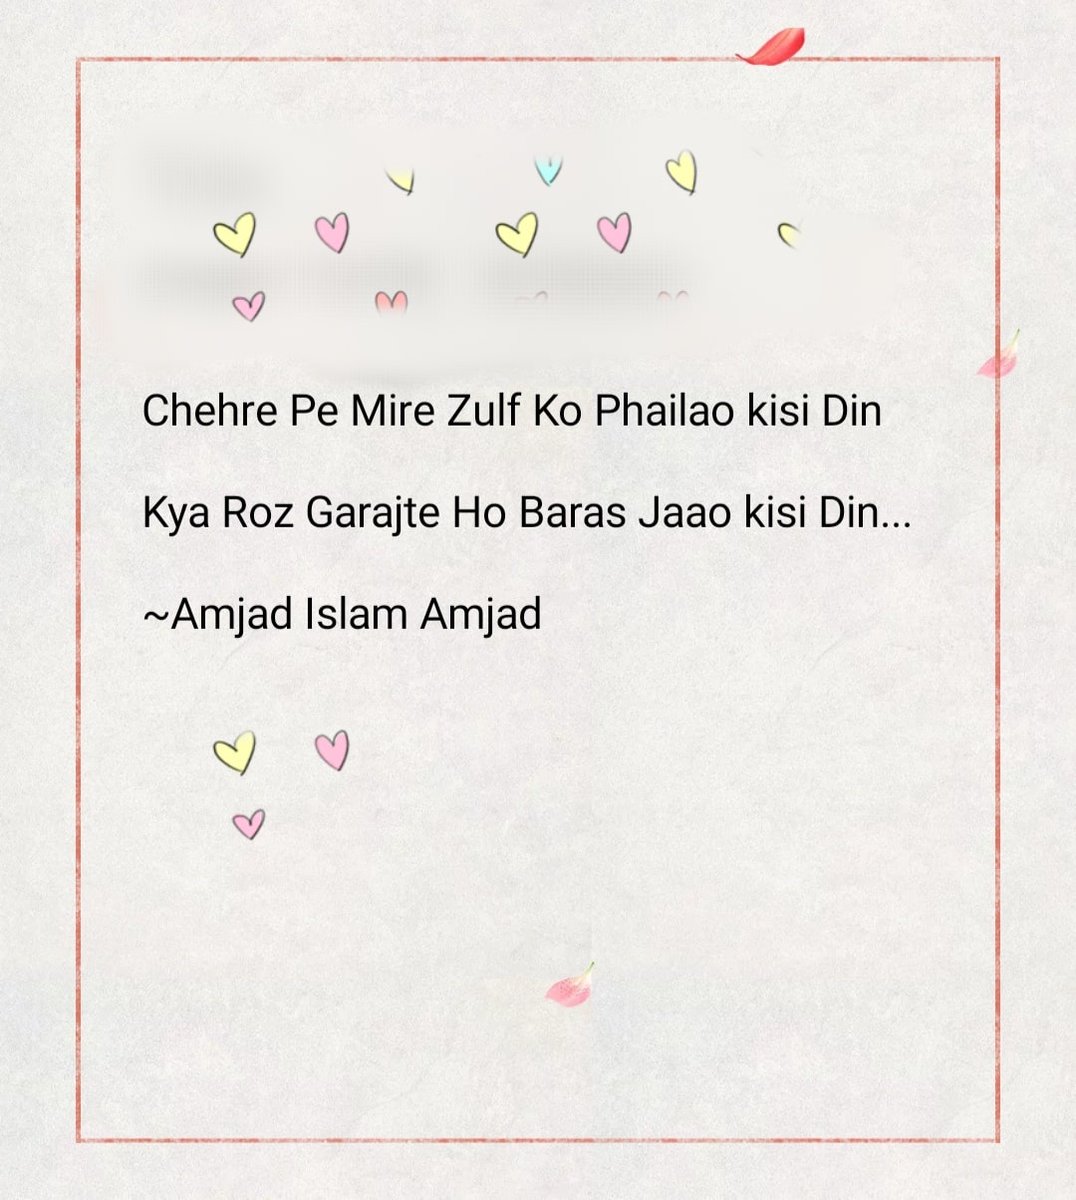 Chehre Pe Mire Zulf Ko Phailao kisi Din
Kya Roz Garajte Ho Baras Jaao kisi Din...
~Amjad Islam Amjad
#BirthAnniversary #AmjadIslamAmjad